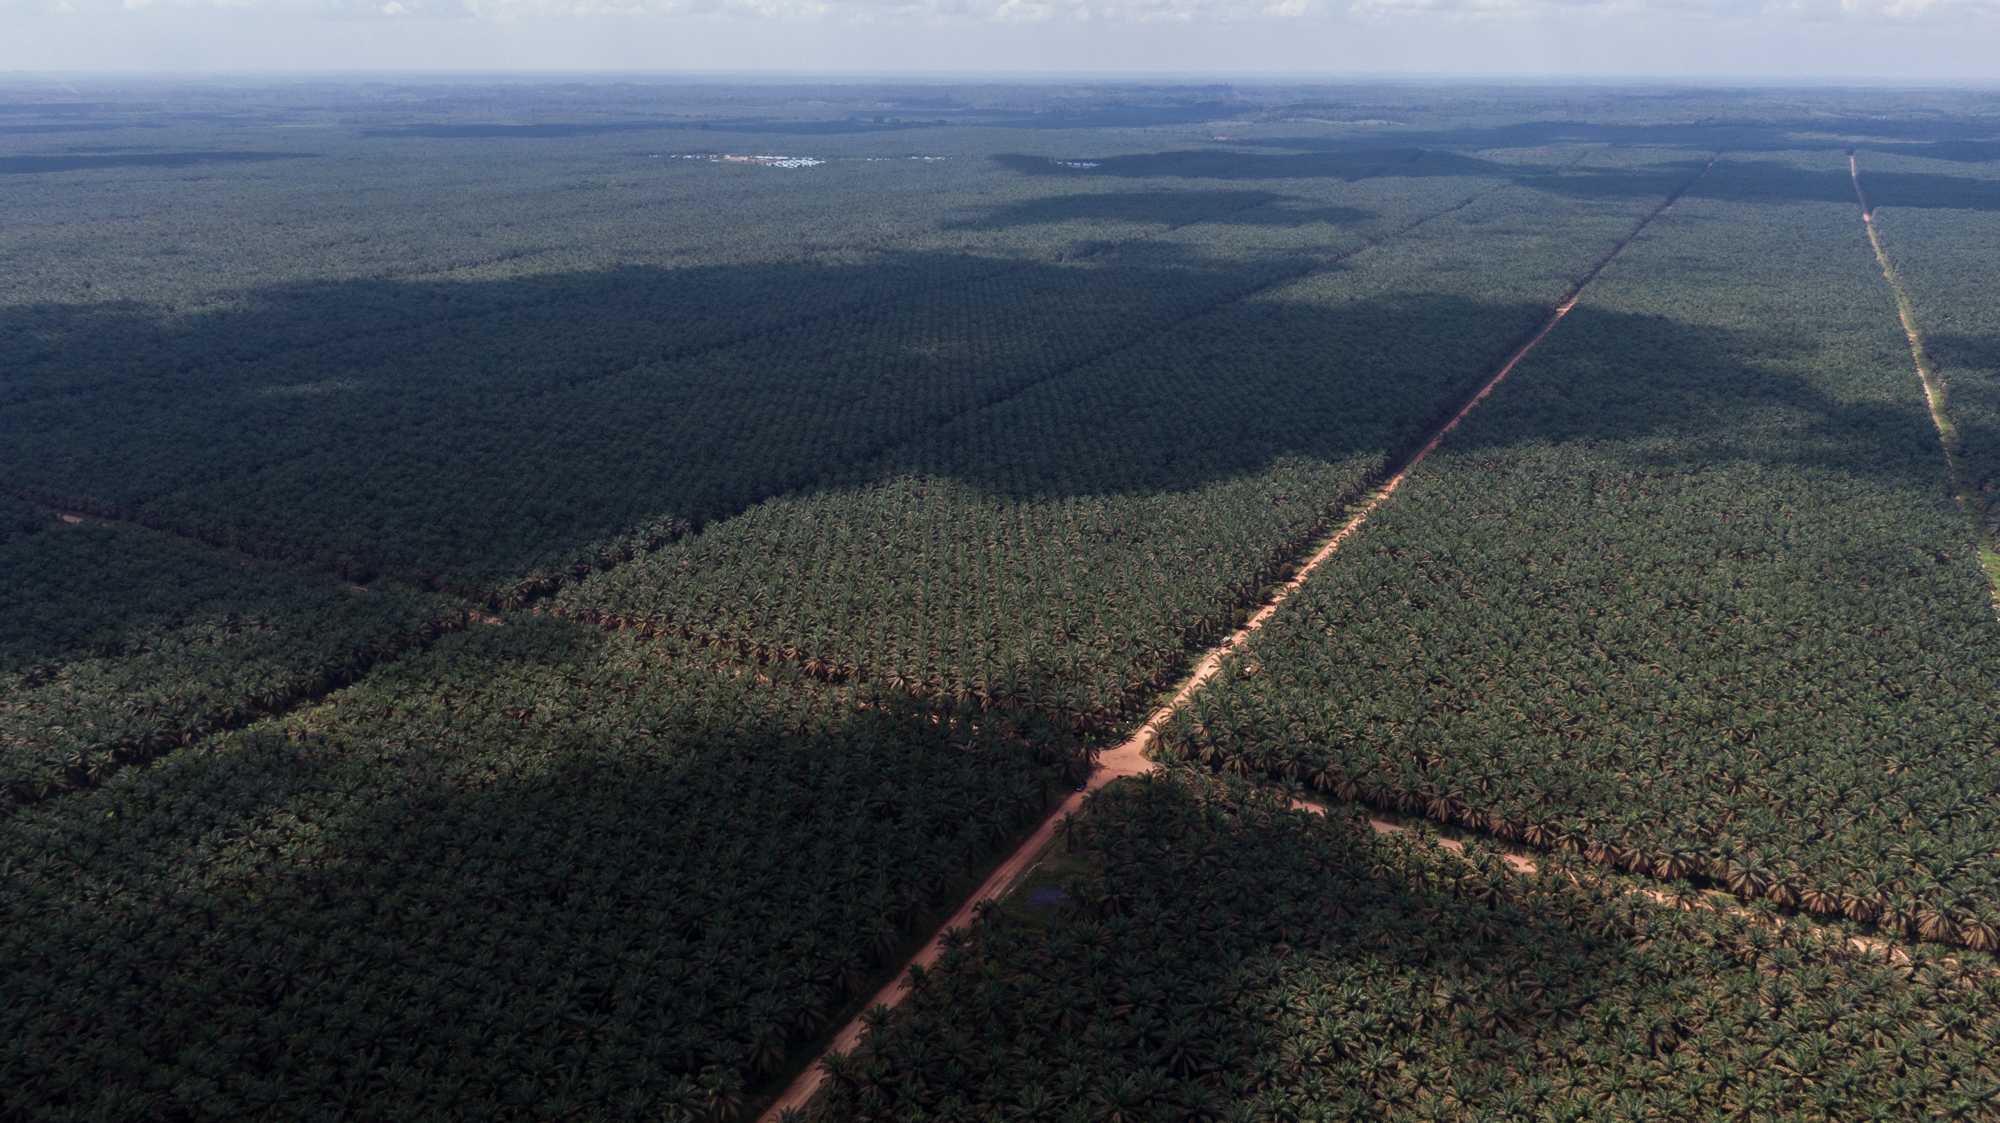 An oil palm plantation in South Sumatra. Photo: Nopri Ismi.